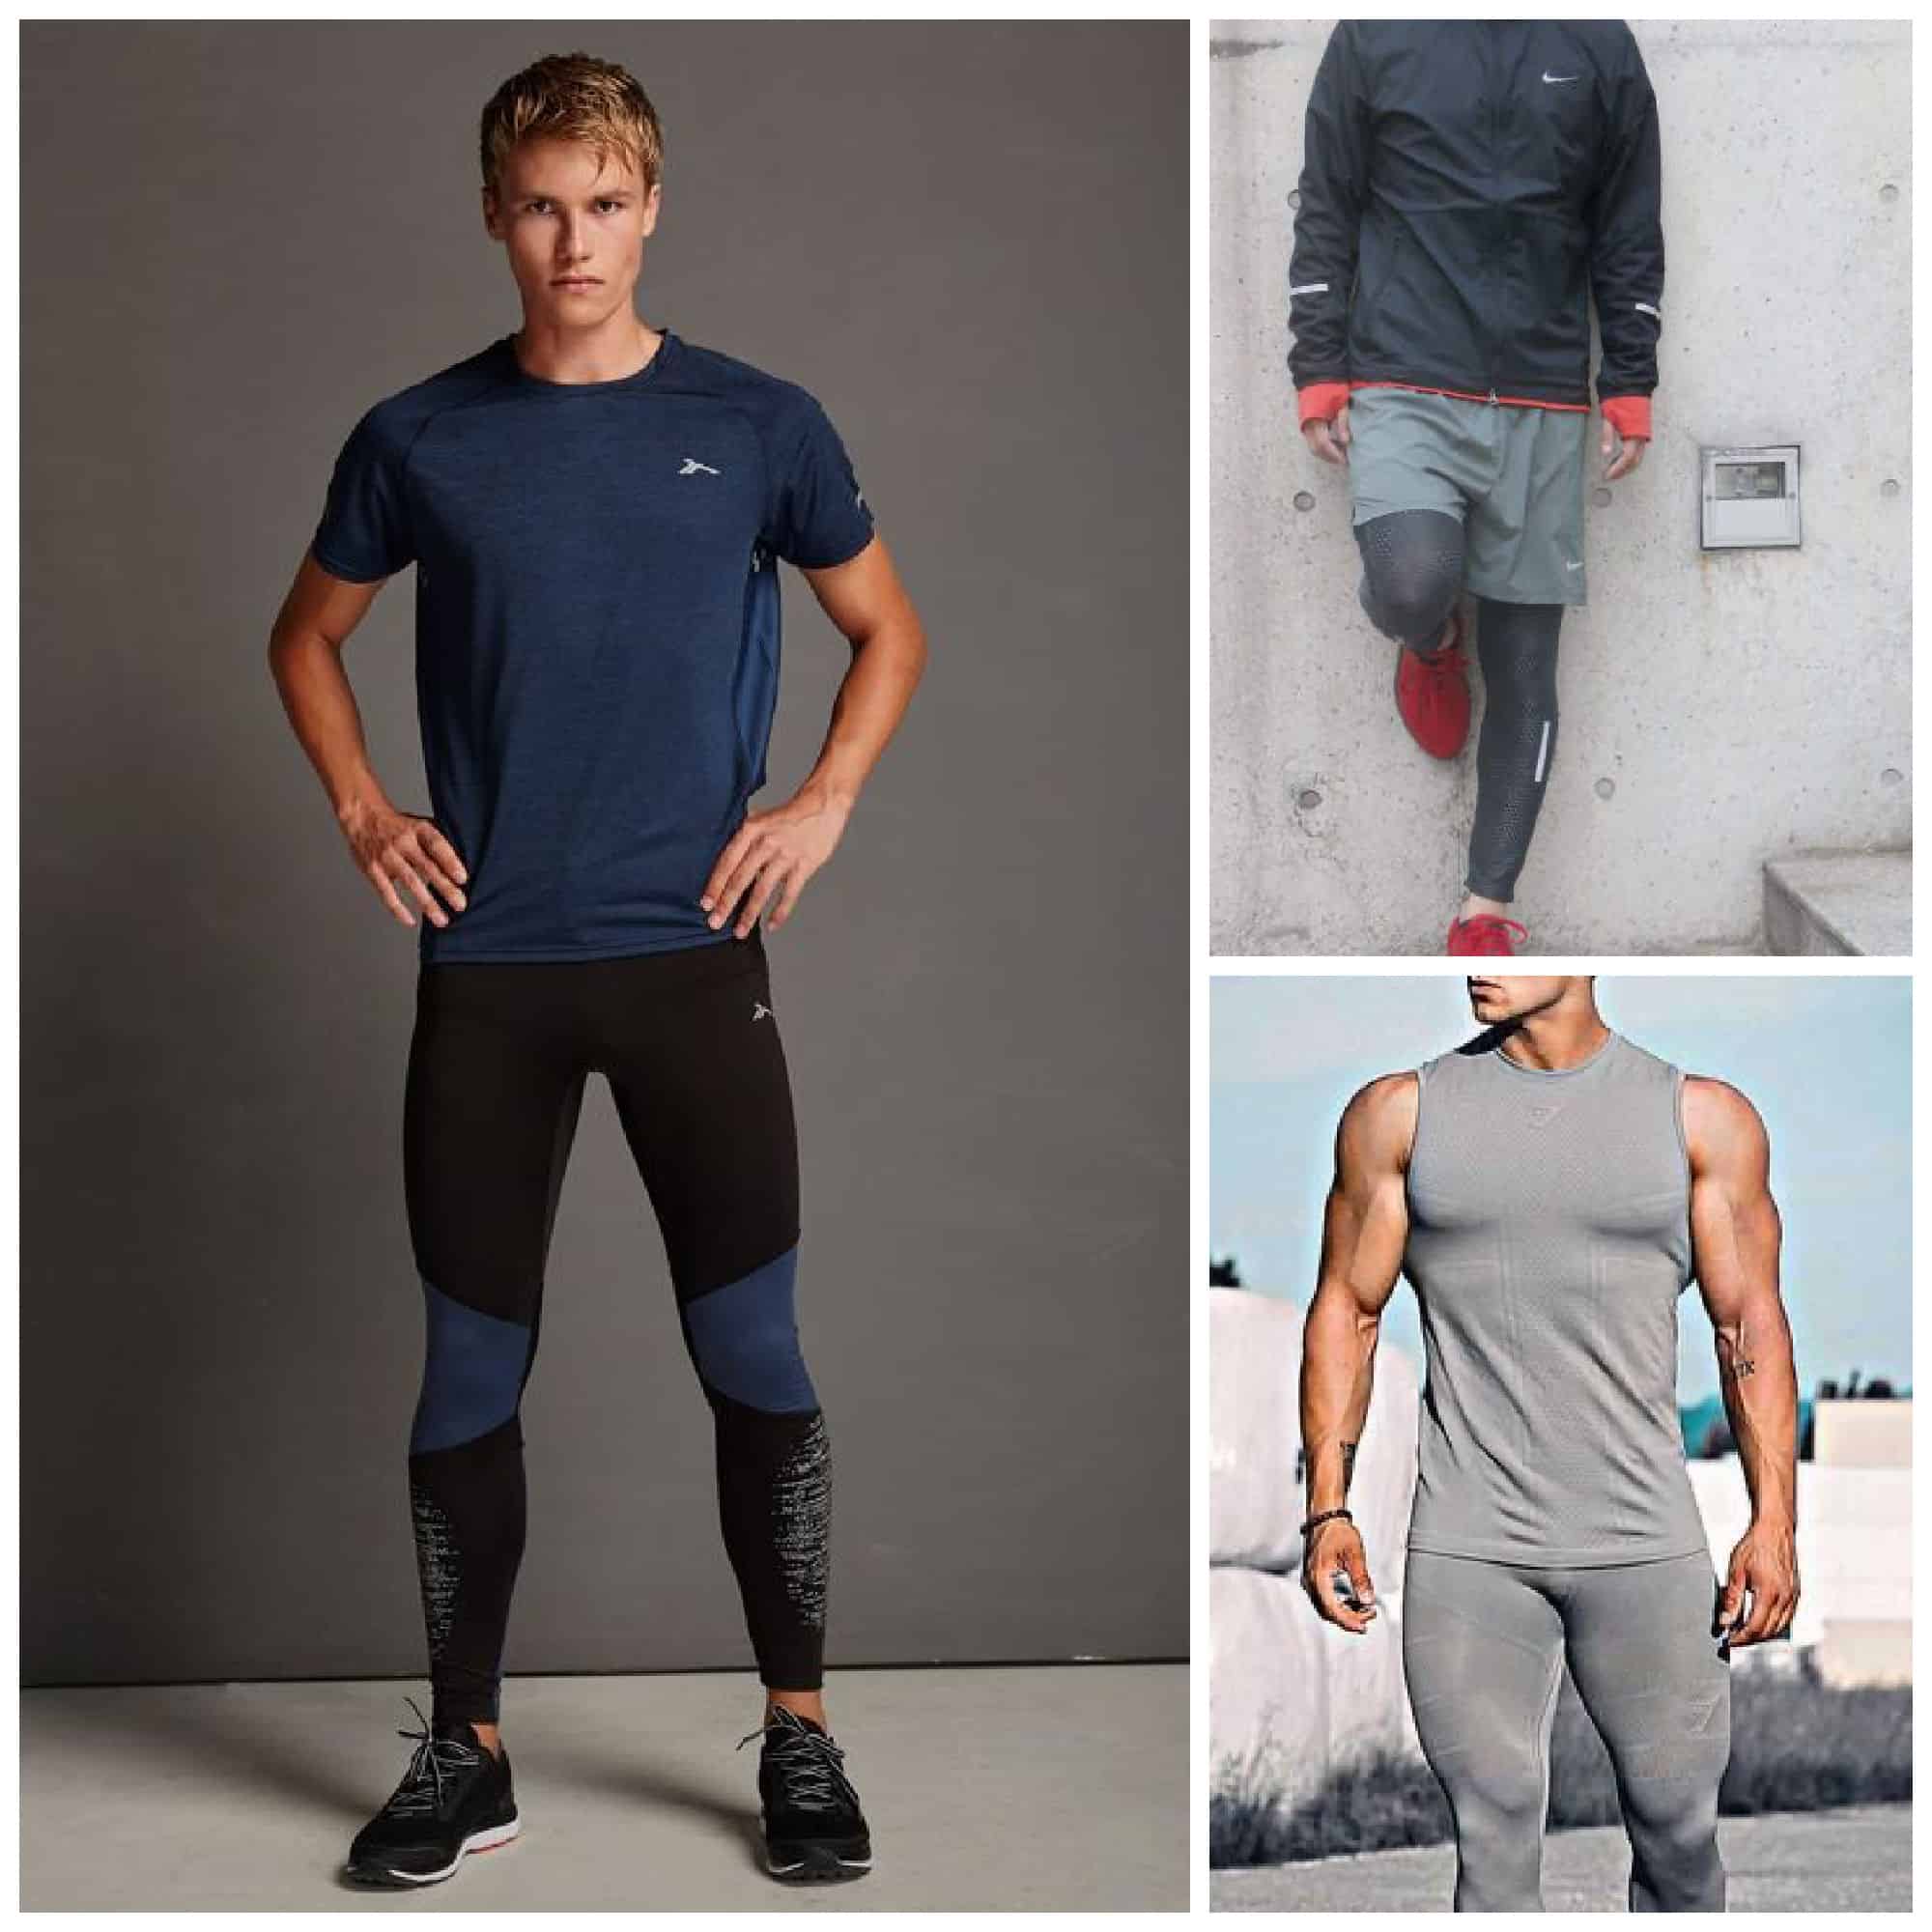 Men wearing Tights under shorts.  Mens tights, Fashion men 2014